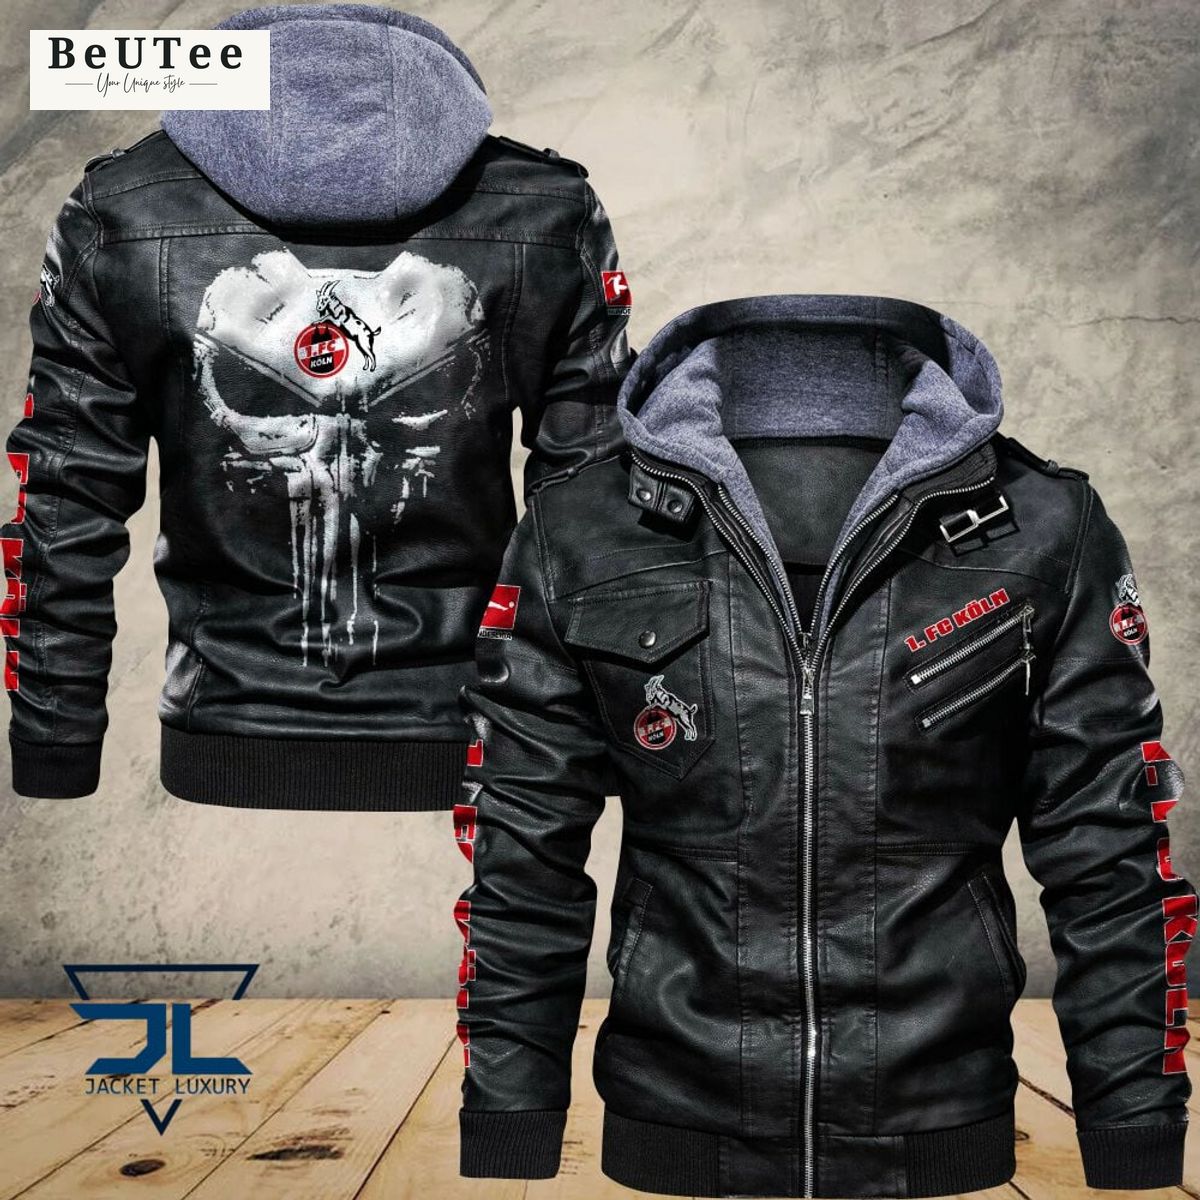 fc koln bundesliga germany league 2d leather jacket 1 j3mJT